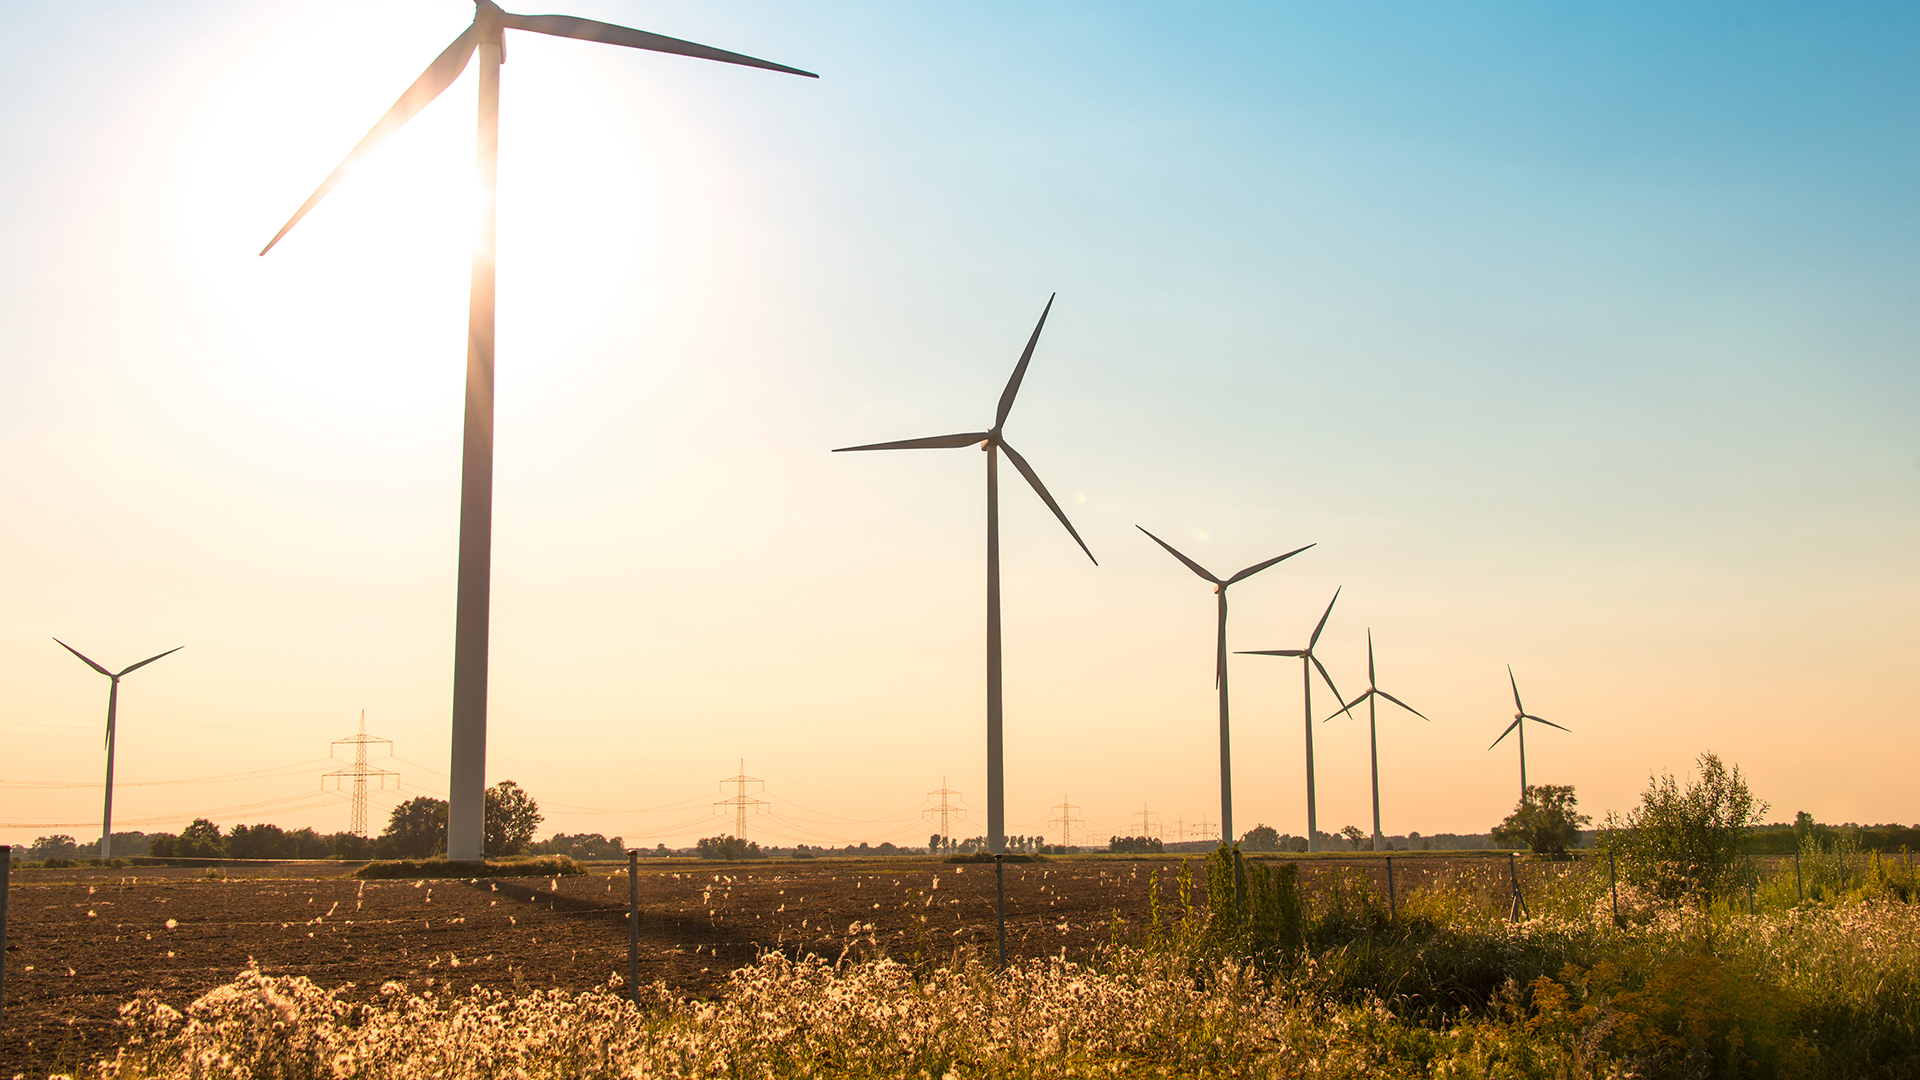 Stadtwerke München acquires a wind farm in Sweden